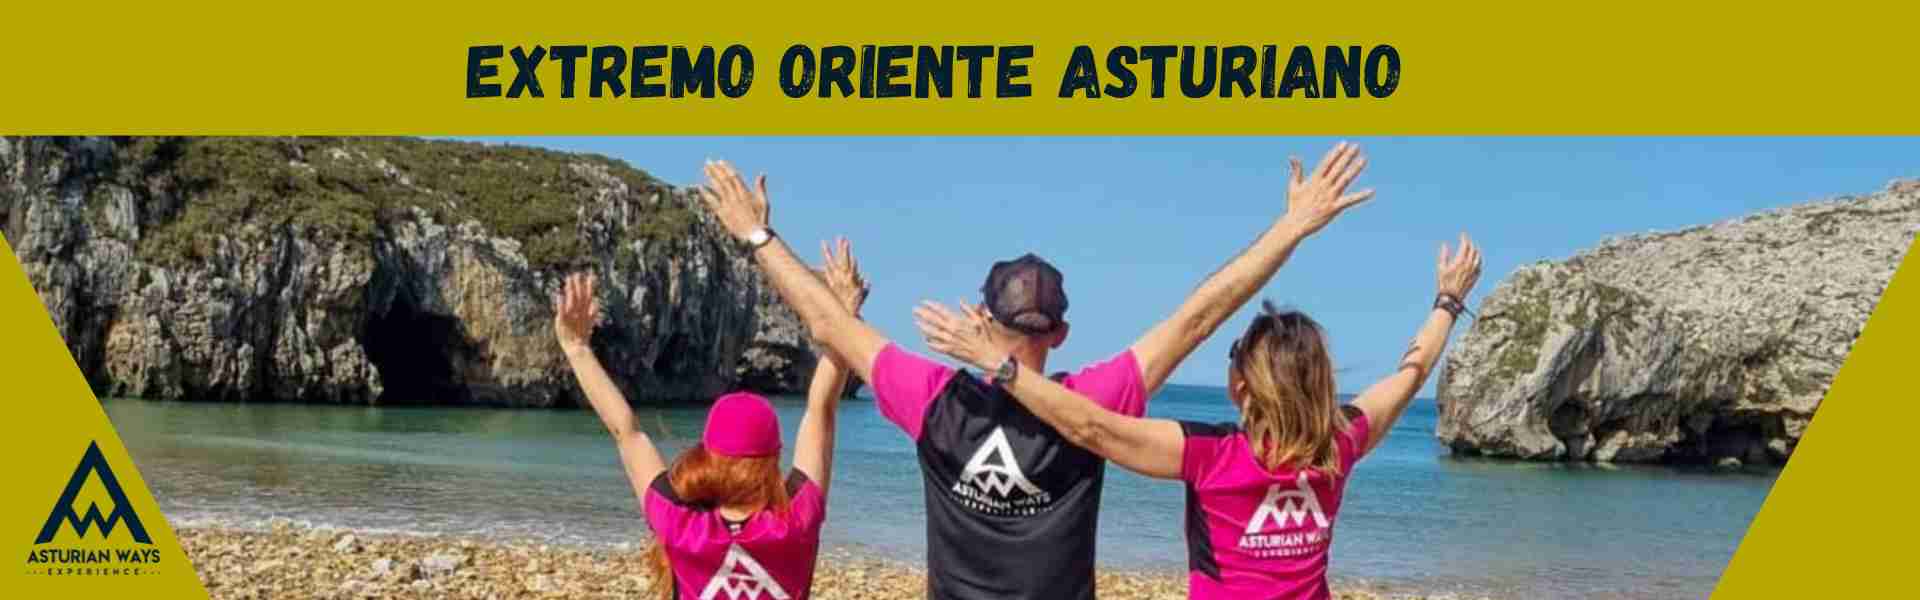 Escapada costa oriental asturiana